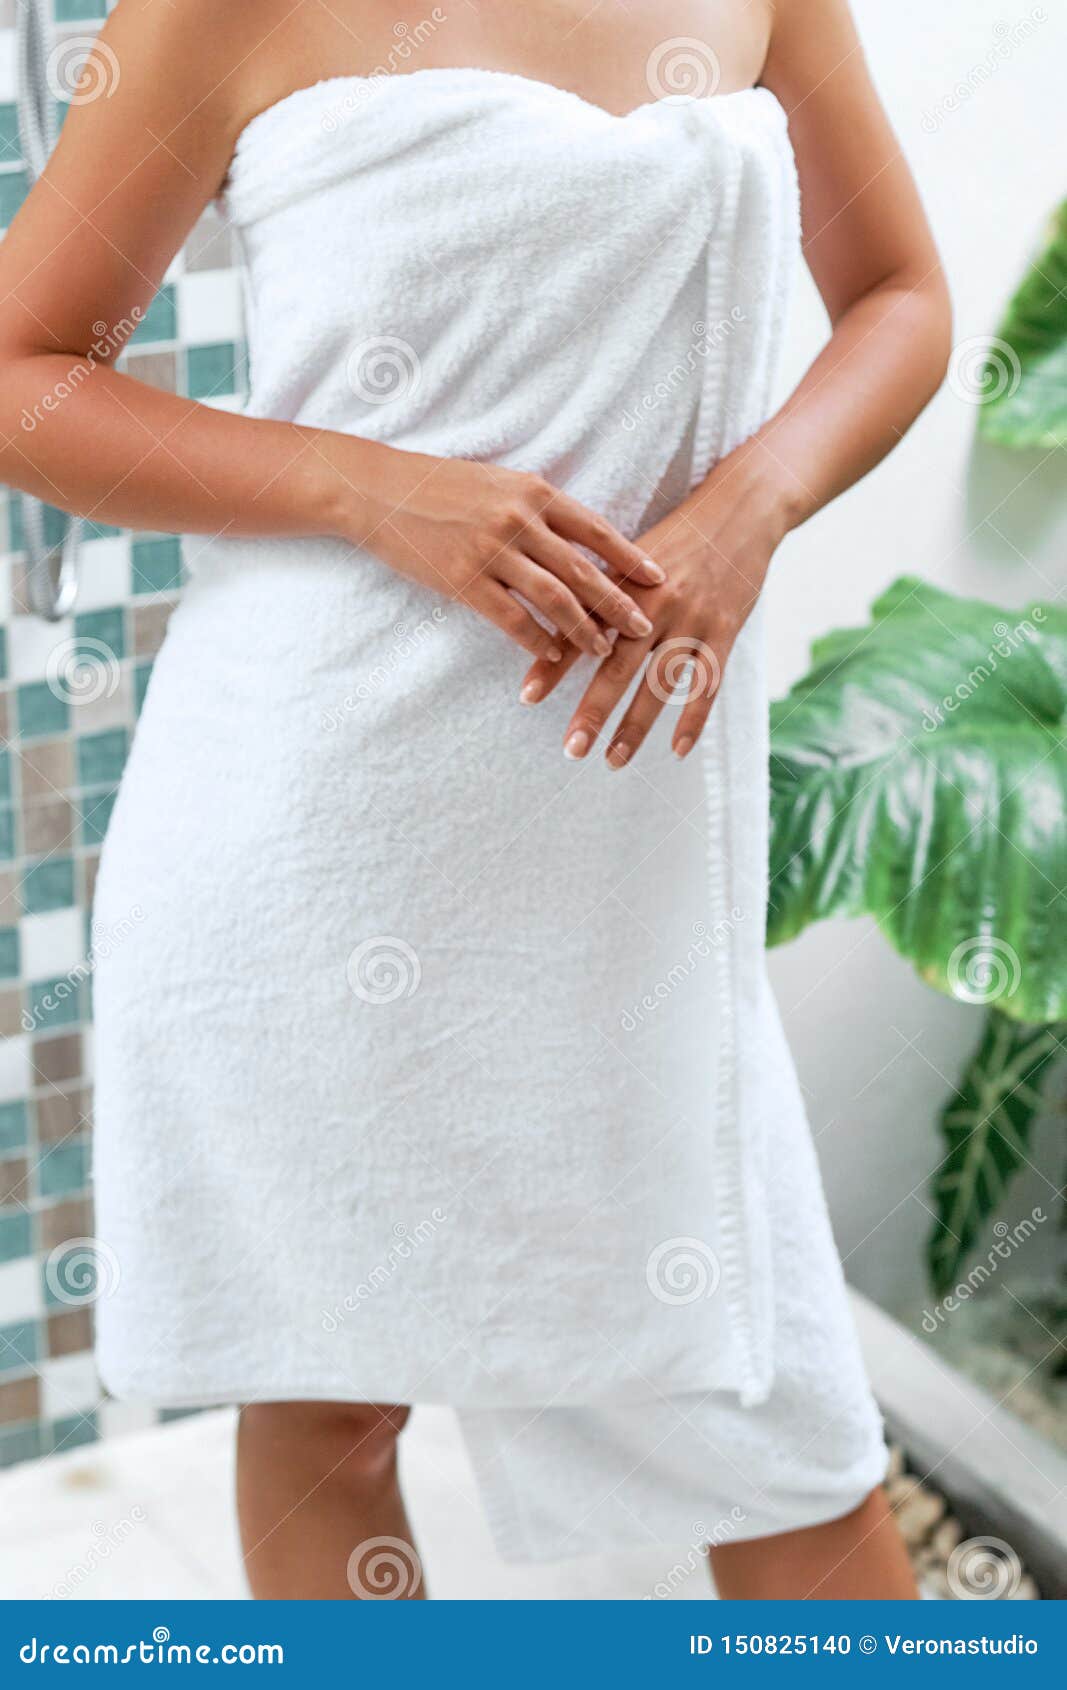 Ходит в полотенце. Девушка в полотенце. Красивая девушка в полотенце. Девушка в белом полотенце. Фотосессия в полотенце.